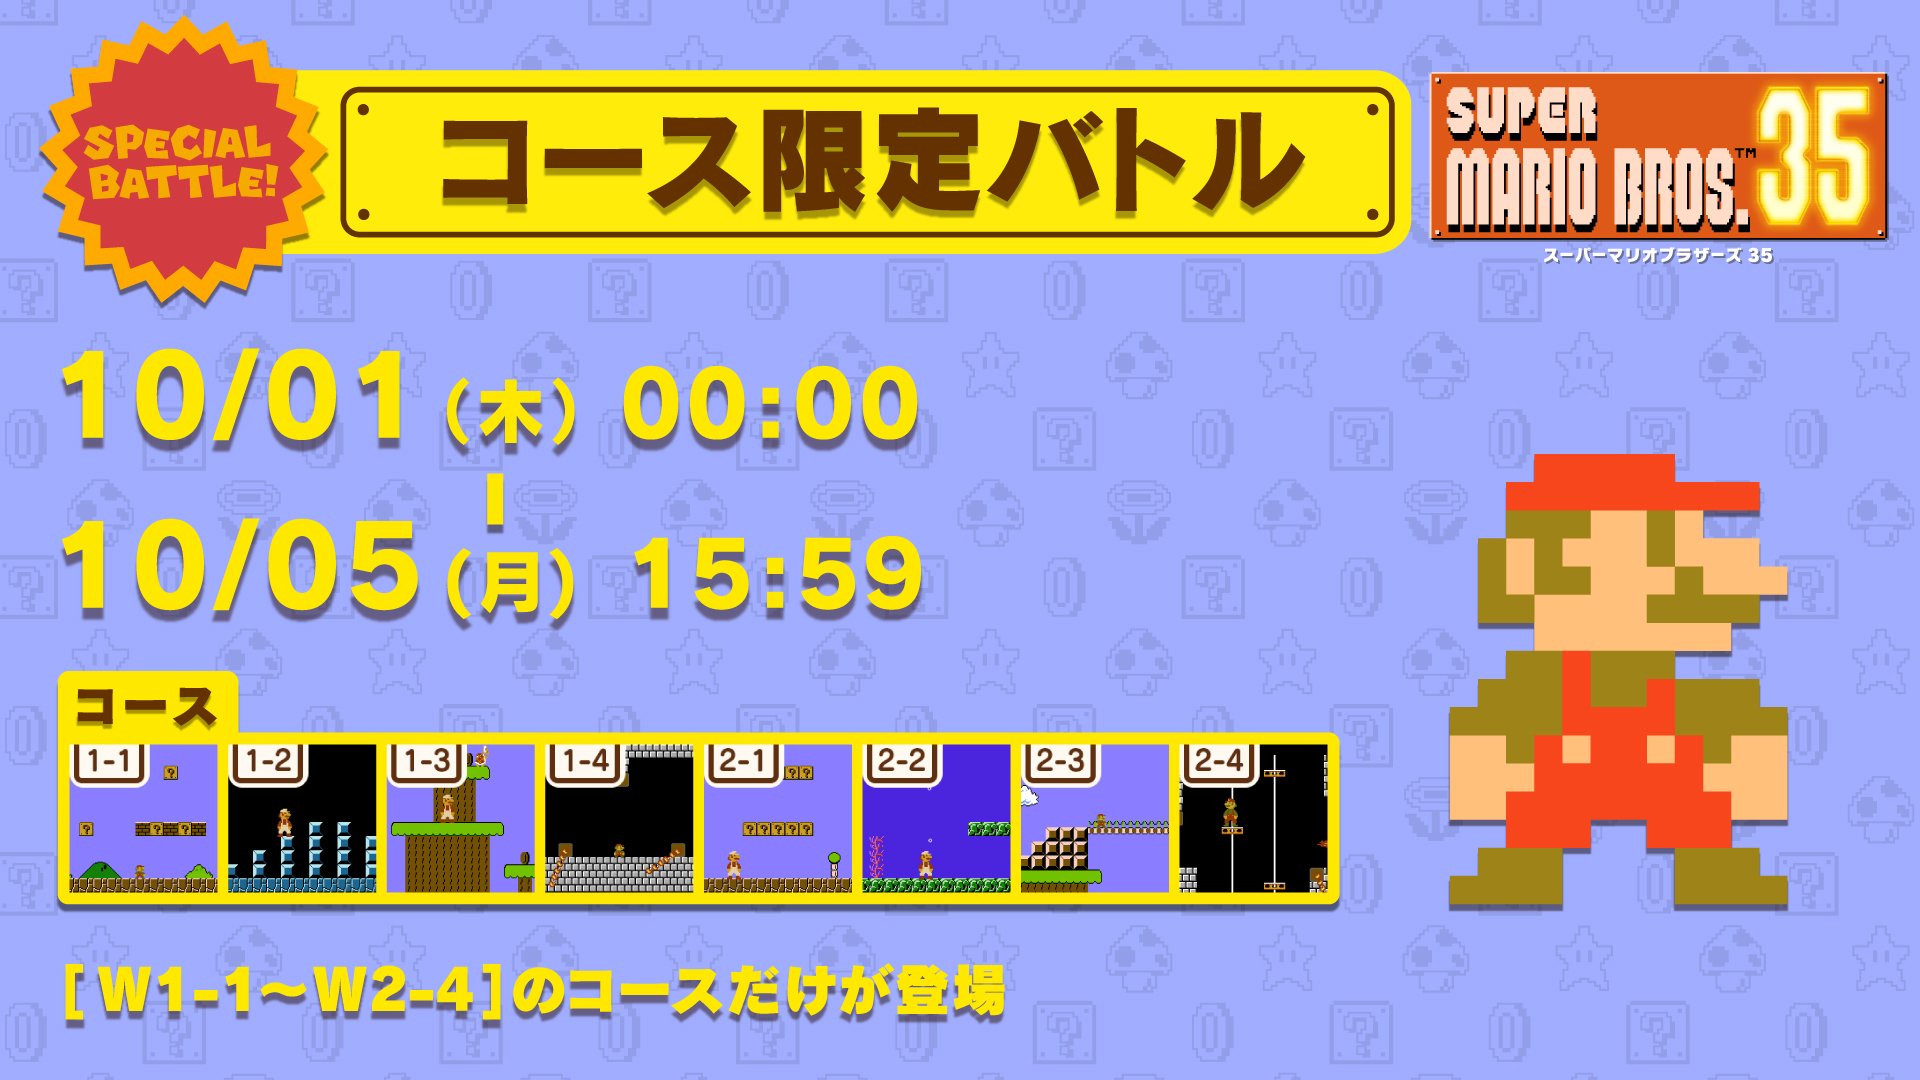 Super Mario Bros 35 Special Battle Detailed Gonintendo